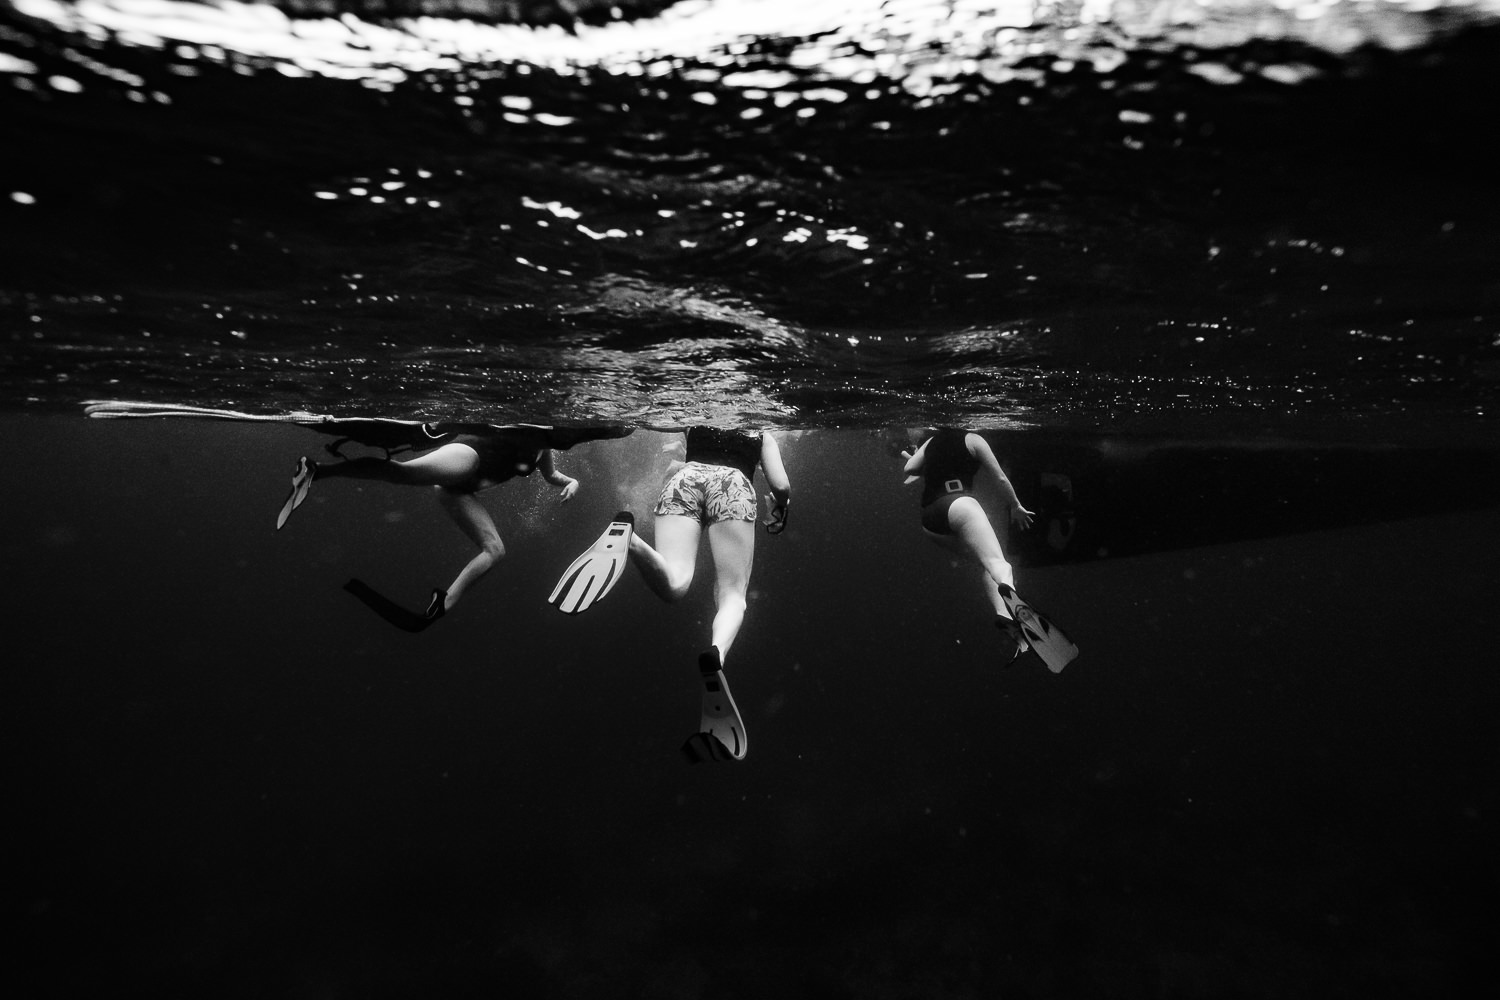 Photographe underwater à la mer